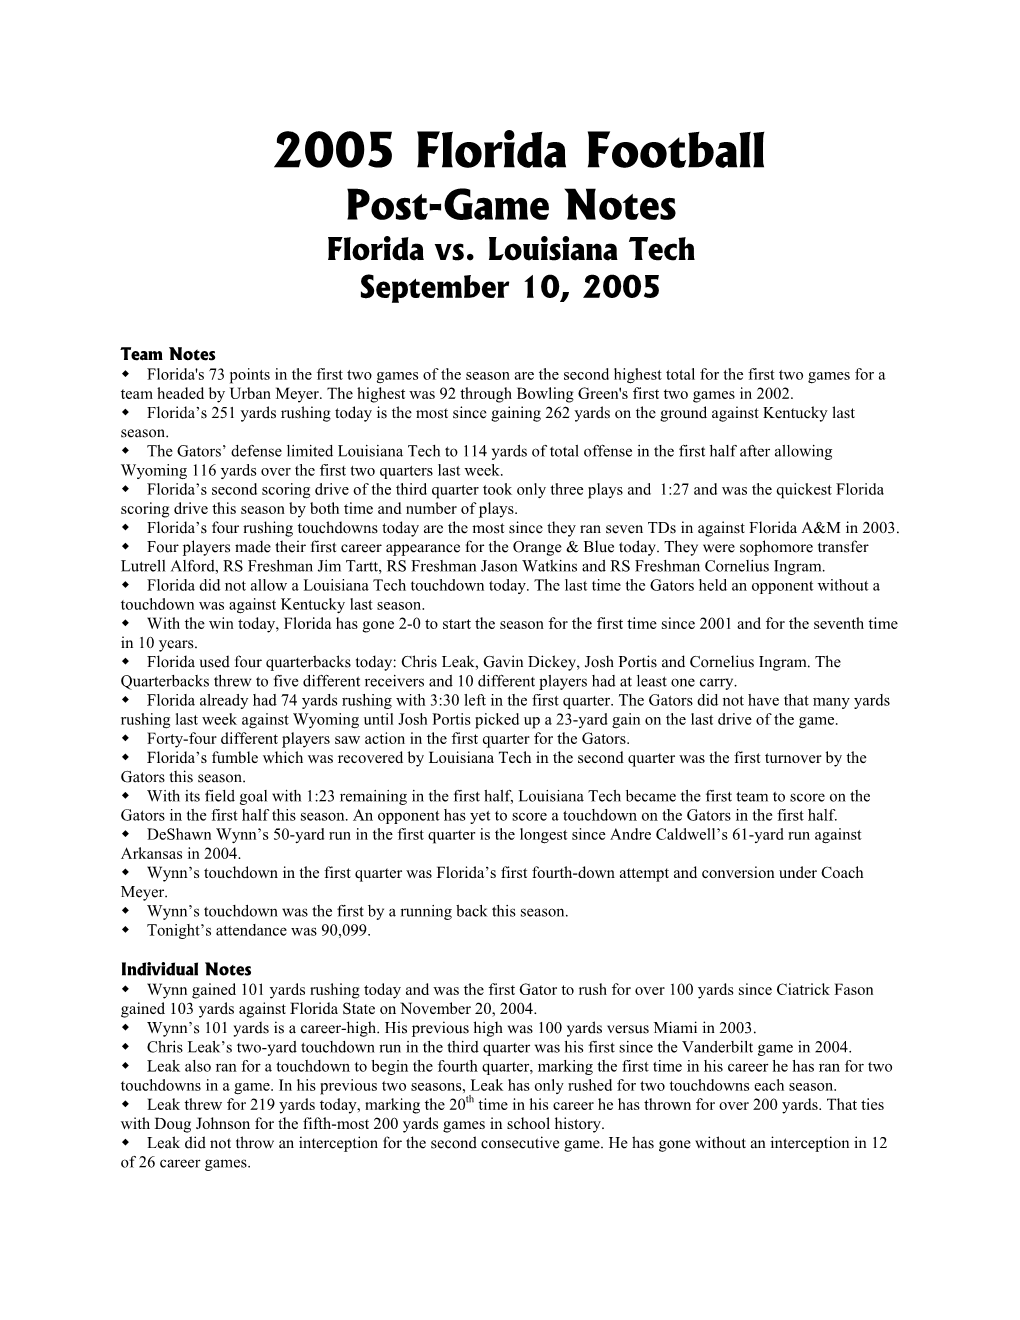 2005 Florida Football Post-Game Notes Florida Vs